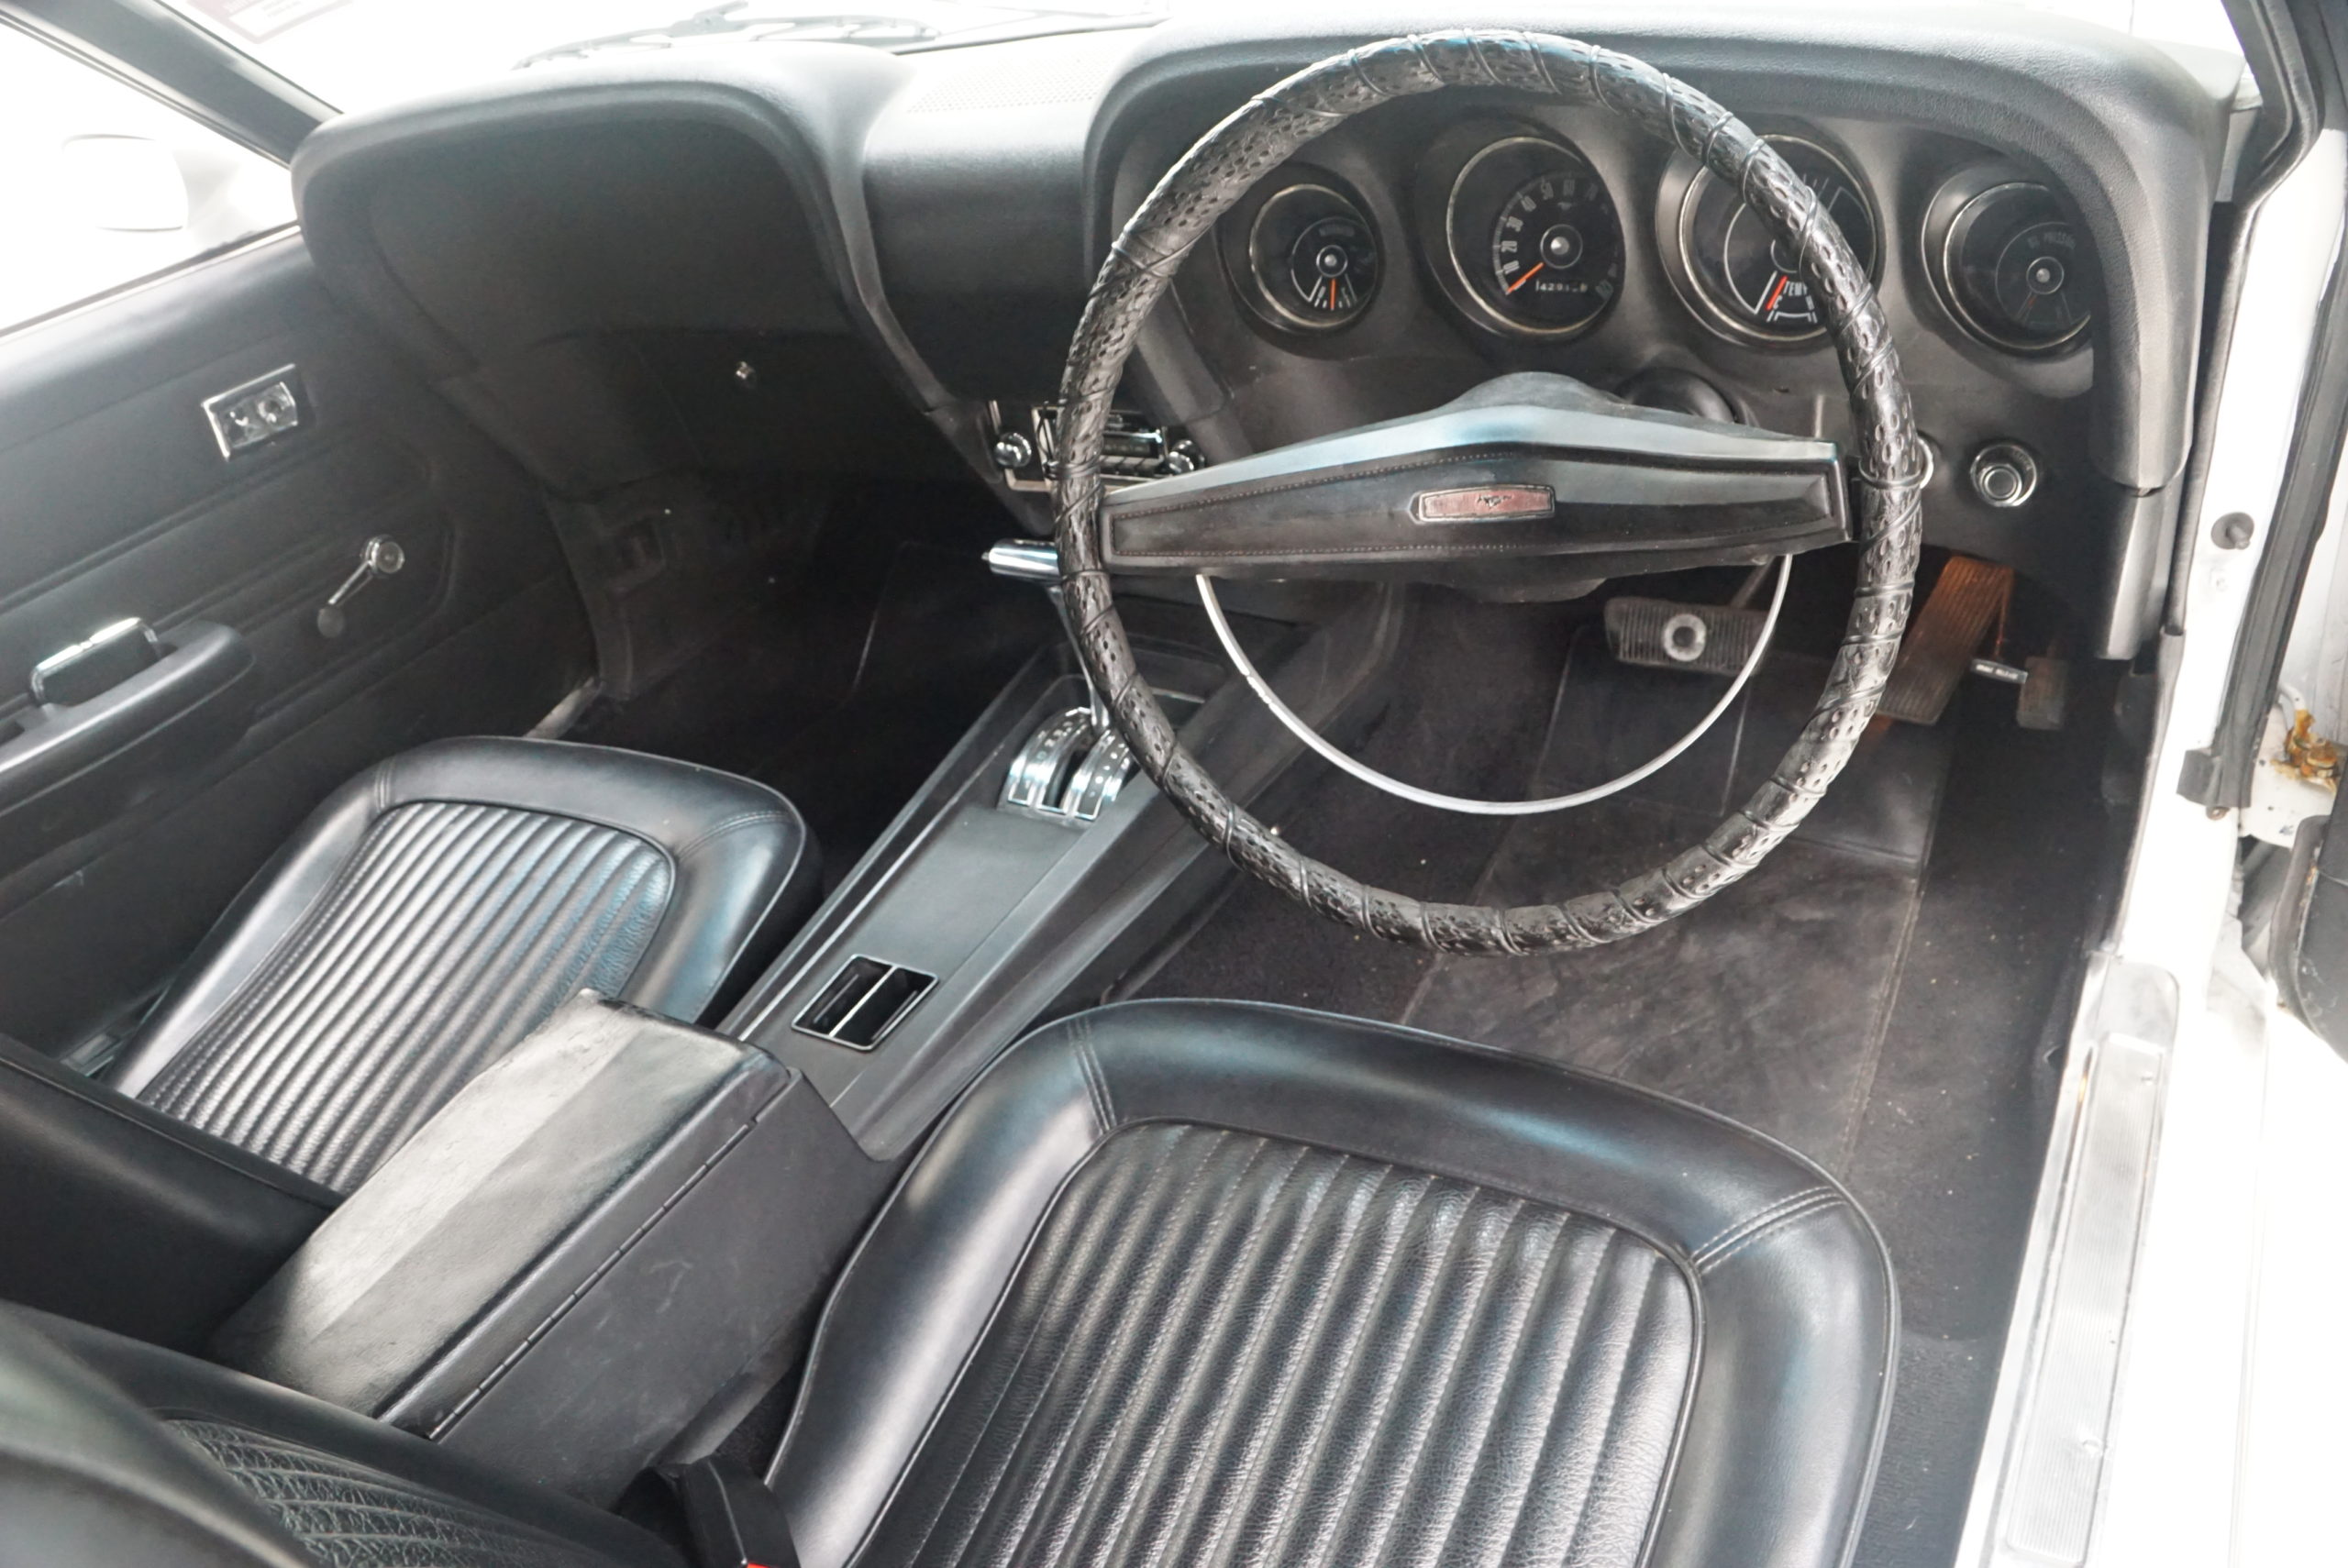 1969 Ford Mustang Boss 302 Tribute Fastback intérieur poste de conduite - Shannons Auctions avril 2021.